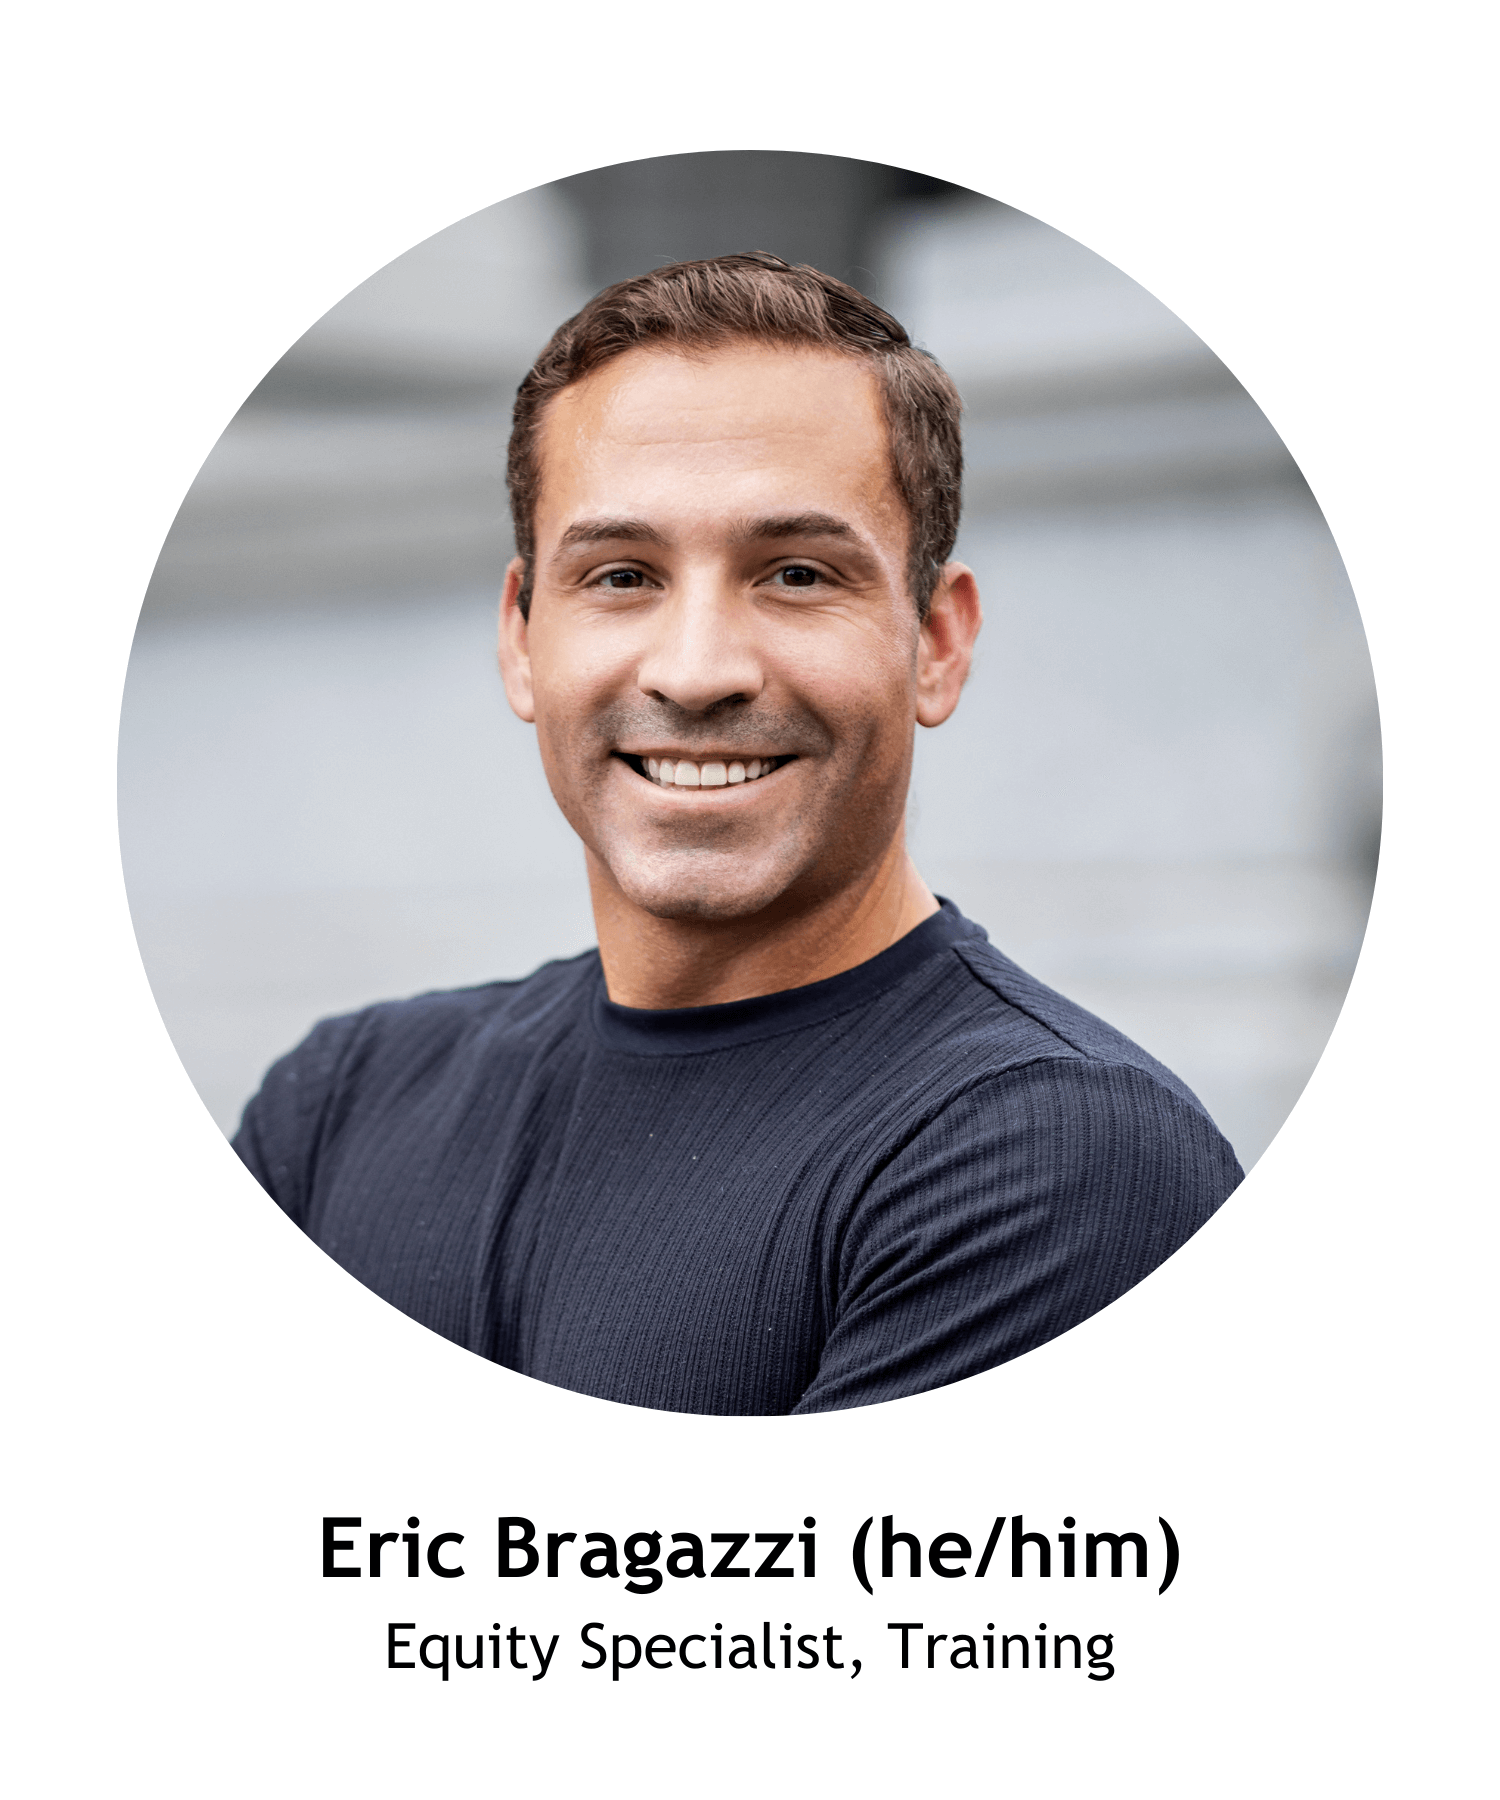 Eric Bragazzi (he/him), Equity Specialist, Training